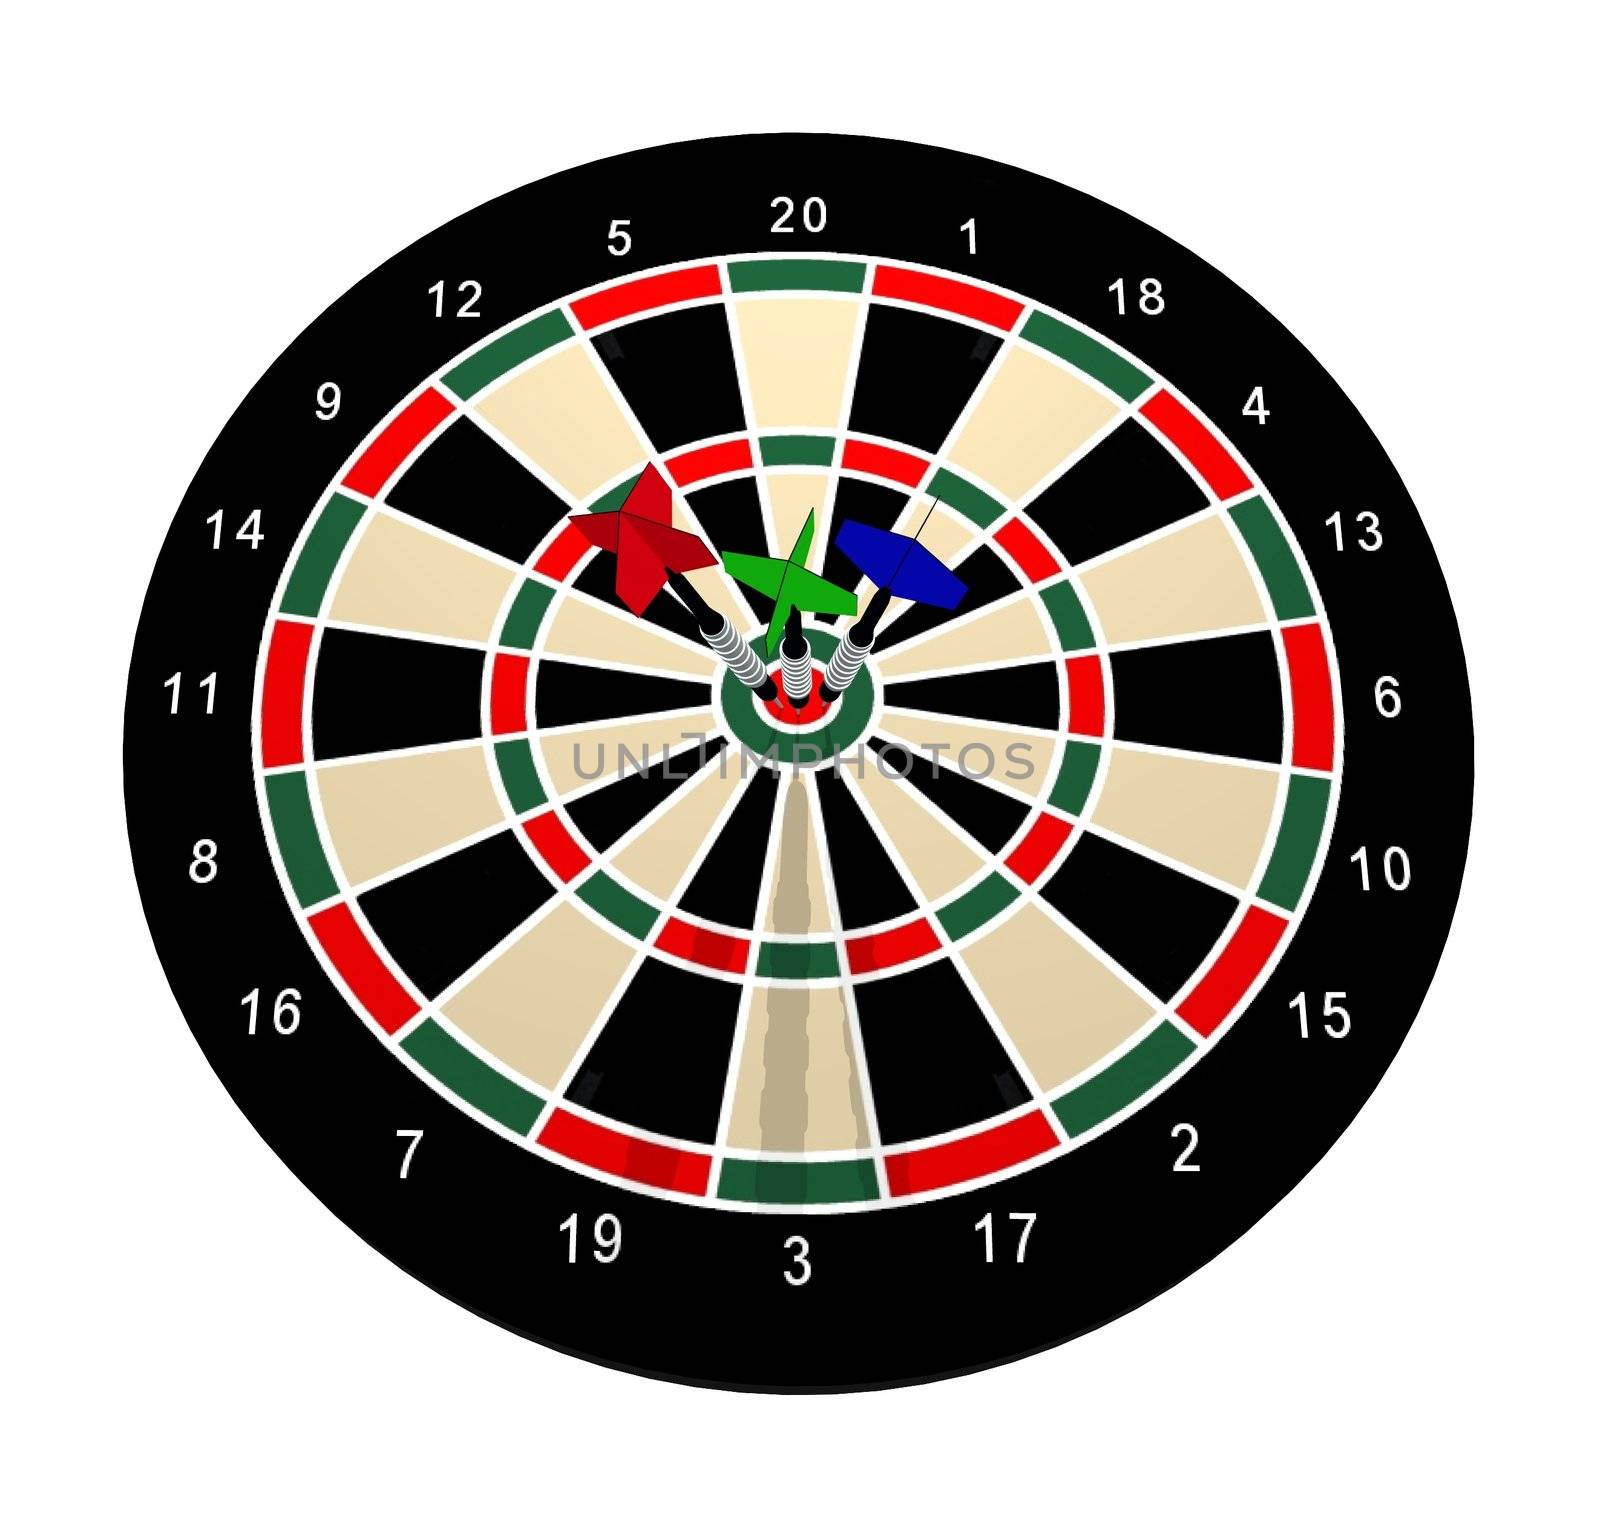 Illustrated dartboard with 3 darts in the bulls eye